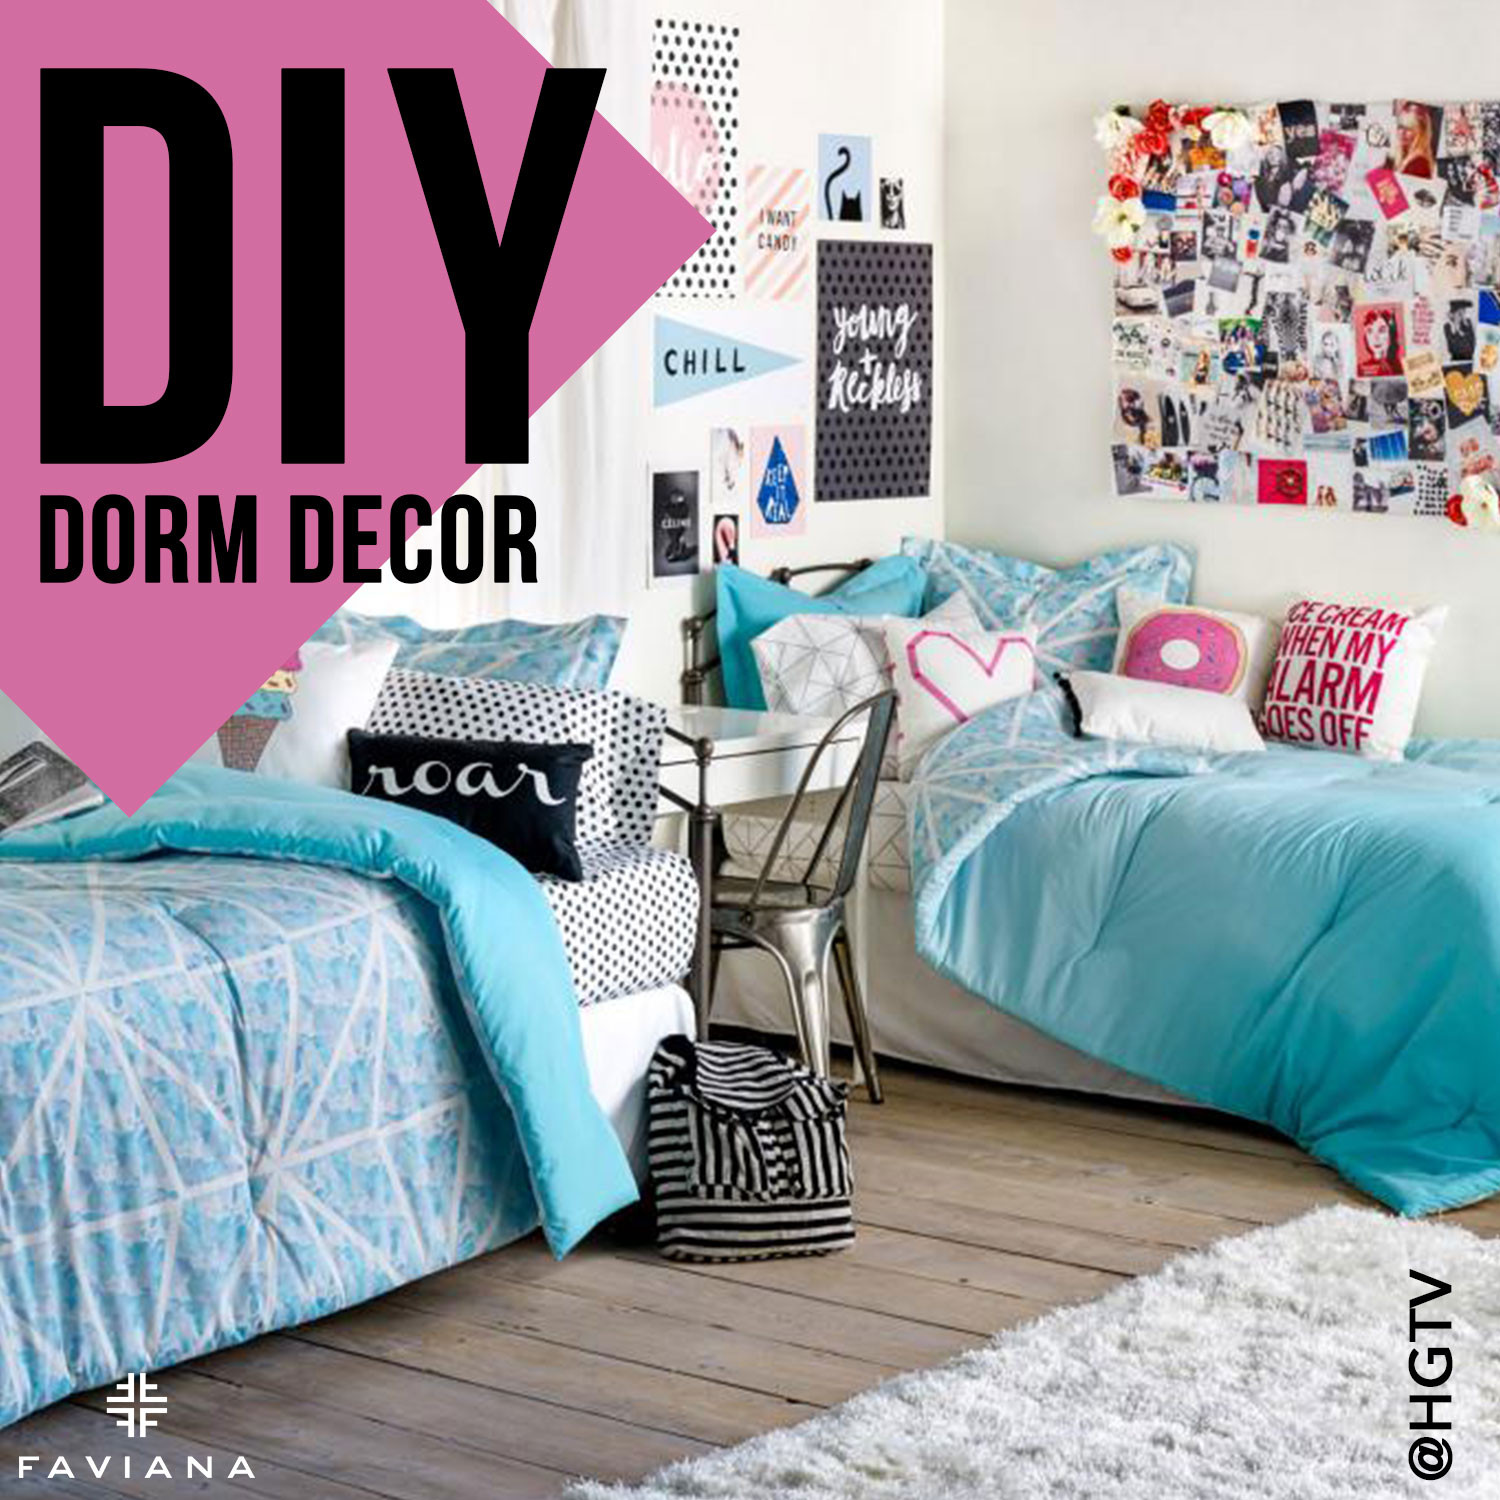 Best ideas about Dorm Room DIY
. Save or Pin DIY Dorm Decor Now.